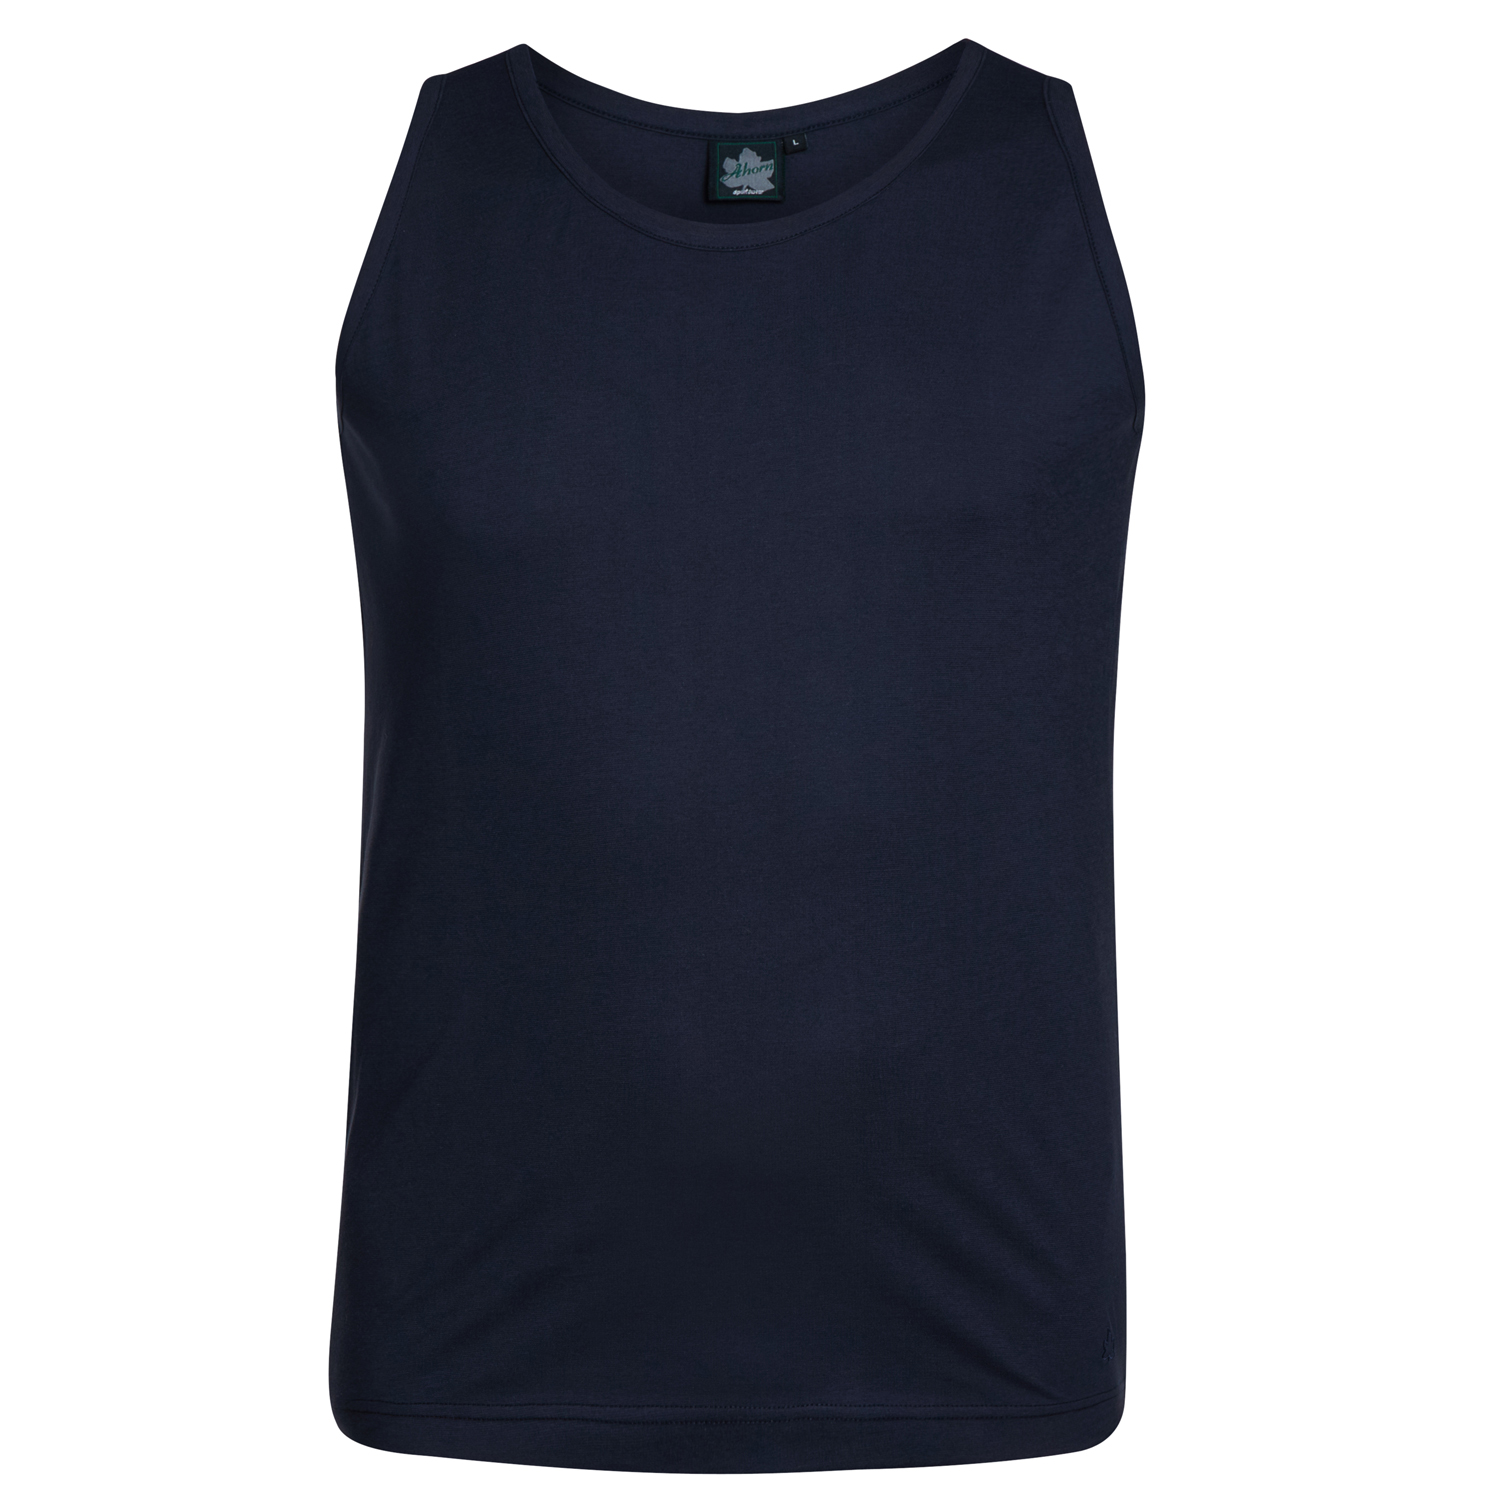 Sleeveless shirt for men in dark blue by Ahorn Sportswear up to oversize 10XL